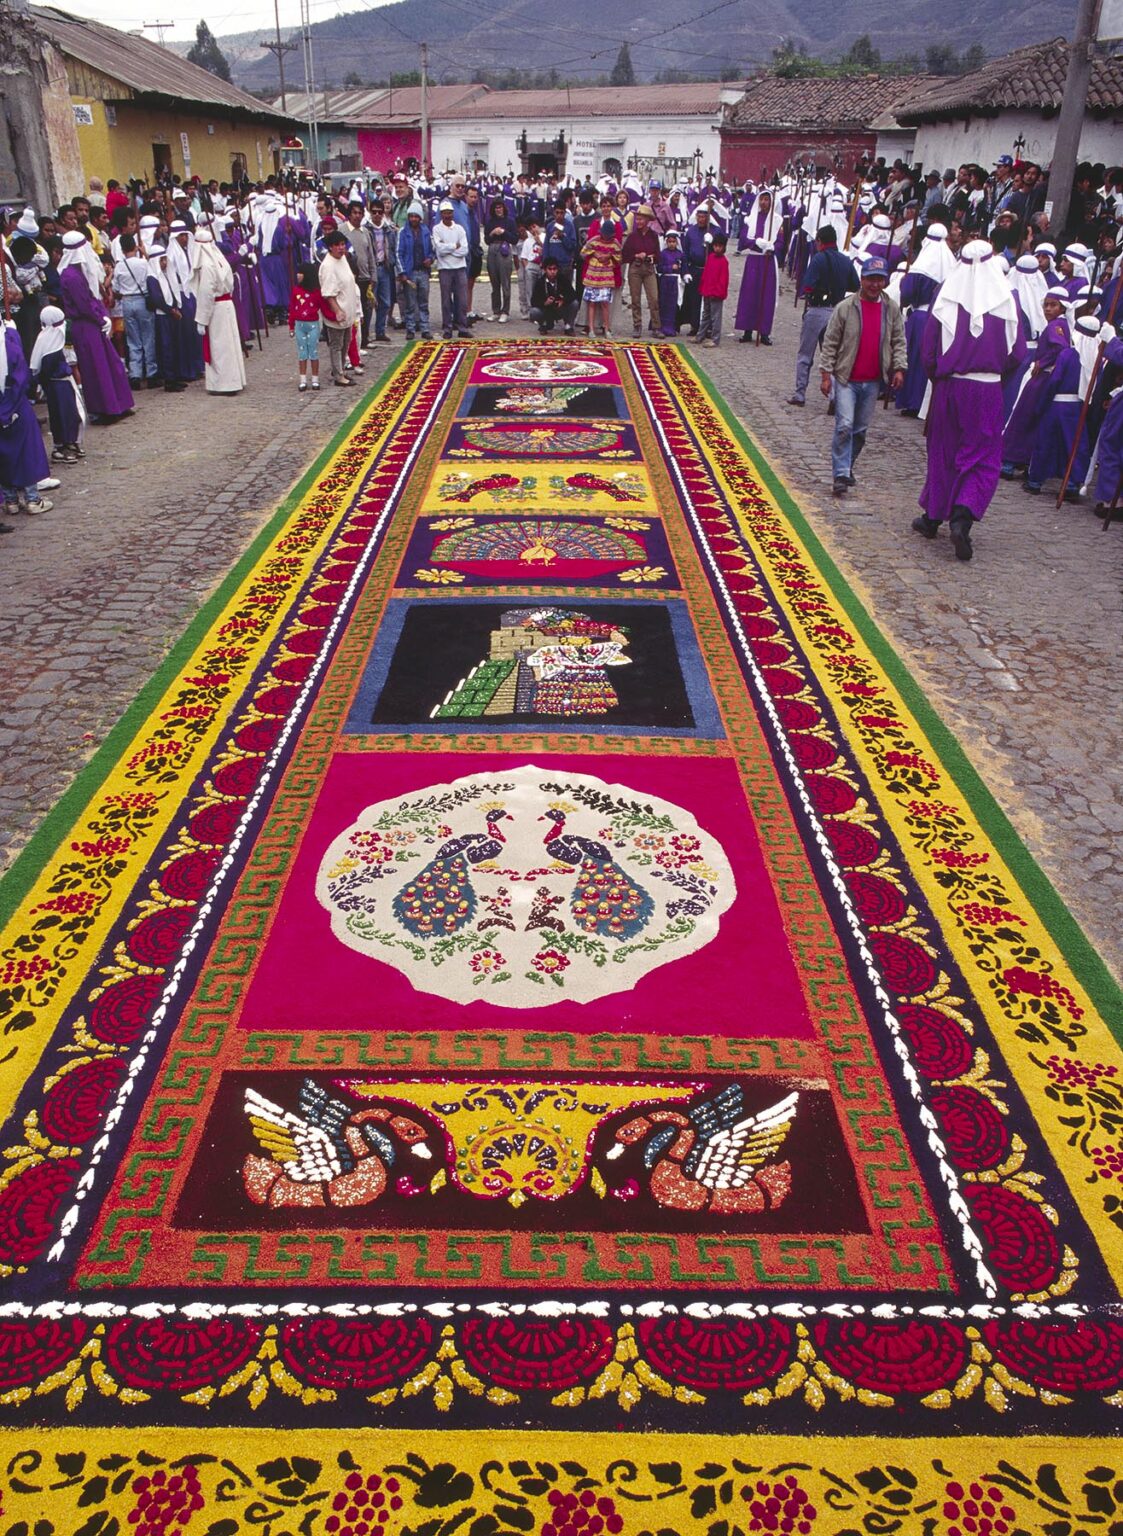 ALFOMBRA (carpet) integrating CATHOLIC and MAYAN symbolism during GOOD FRIDAY procession - ANTIGUA, GUATEMALA